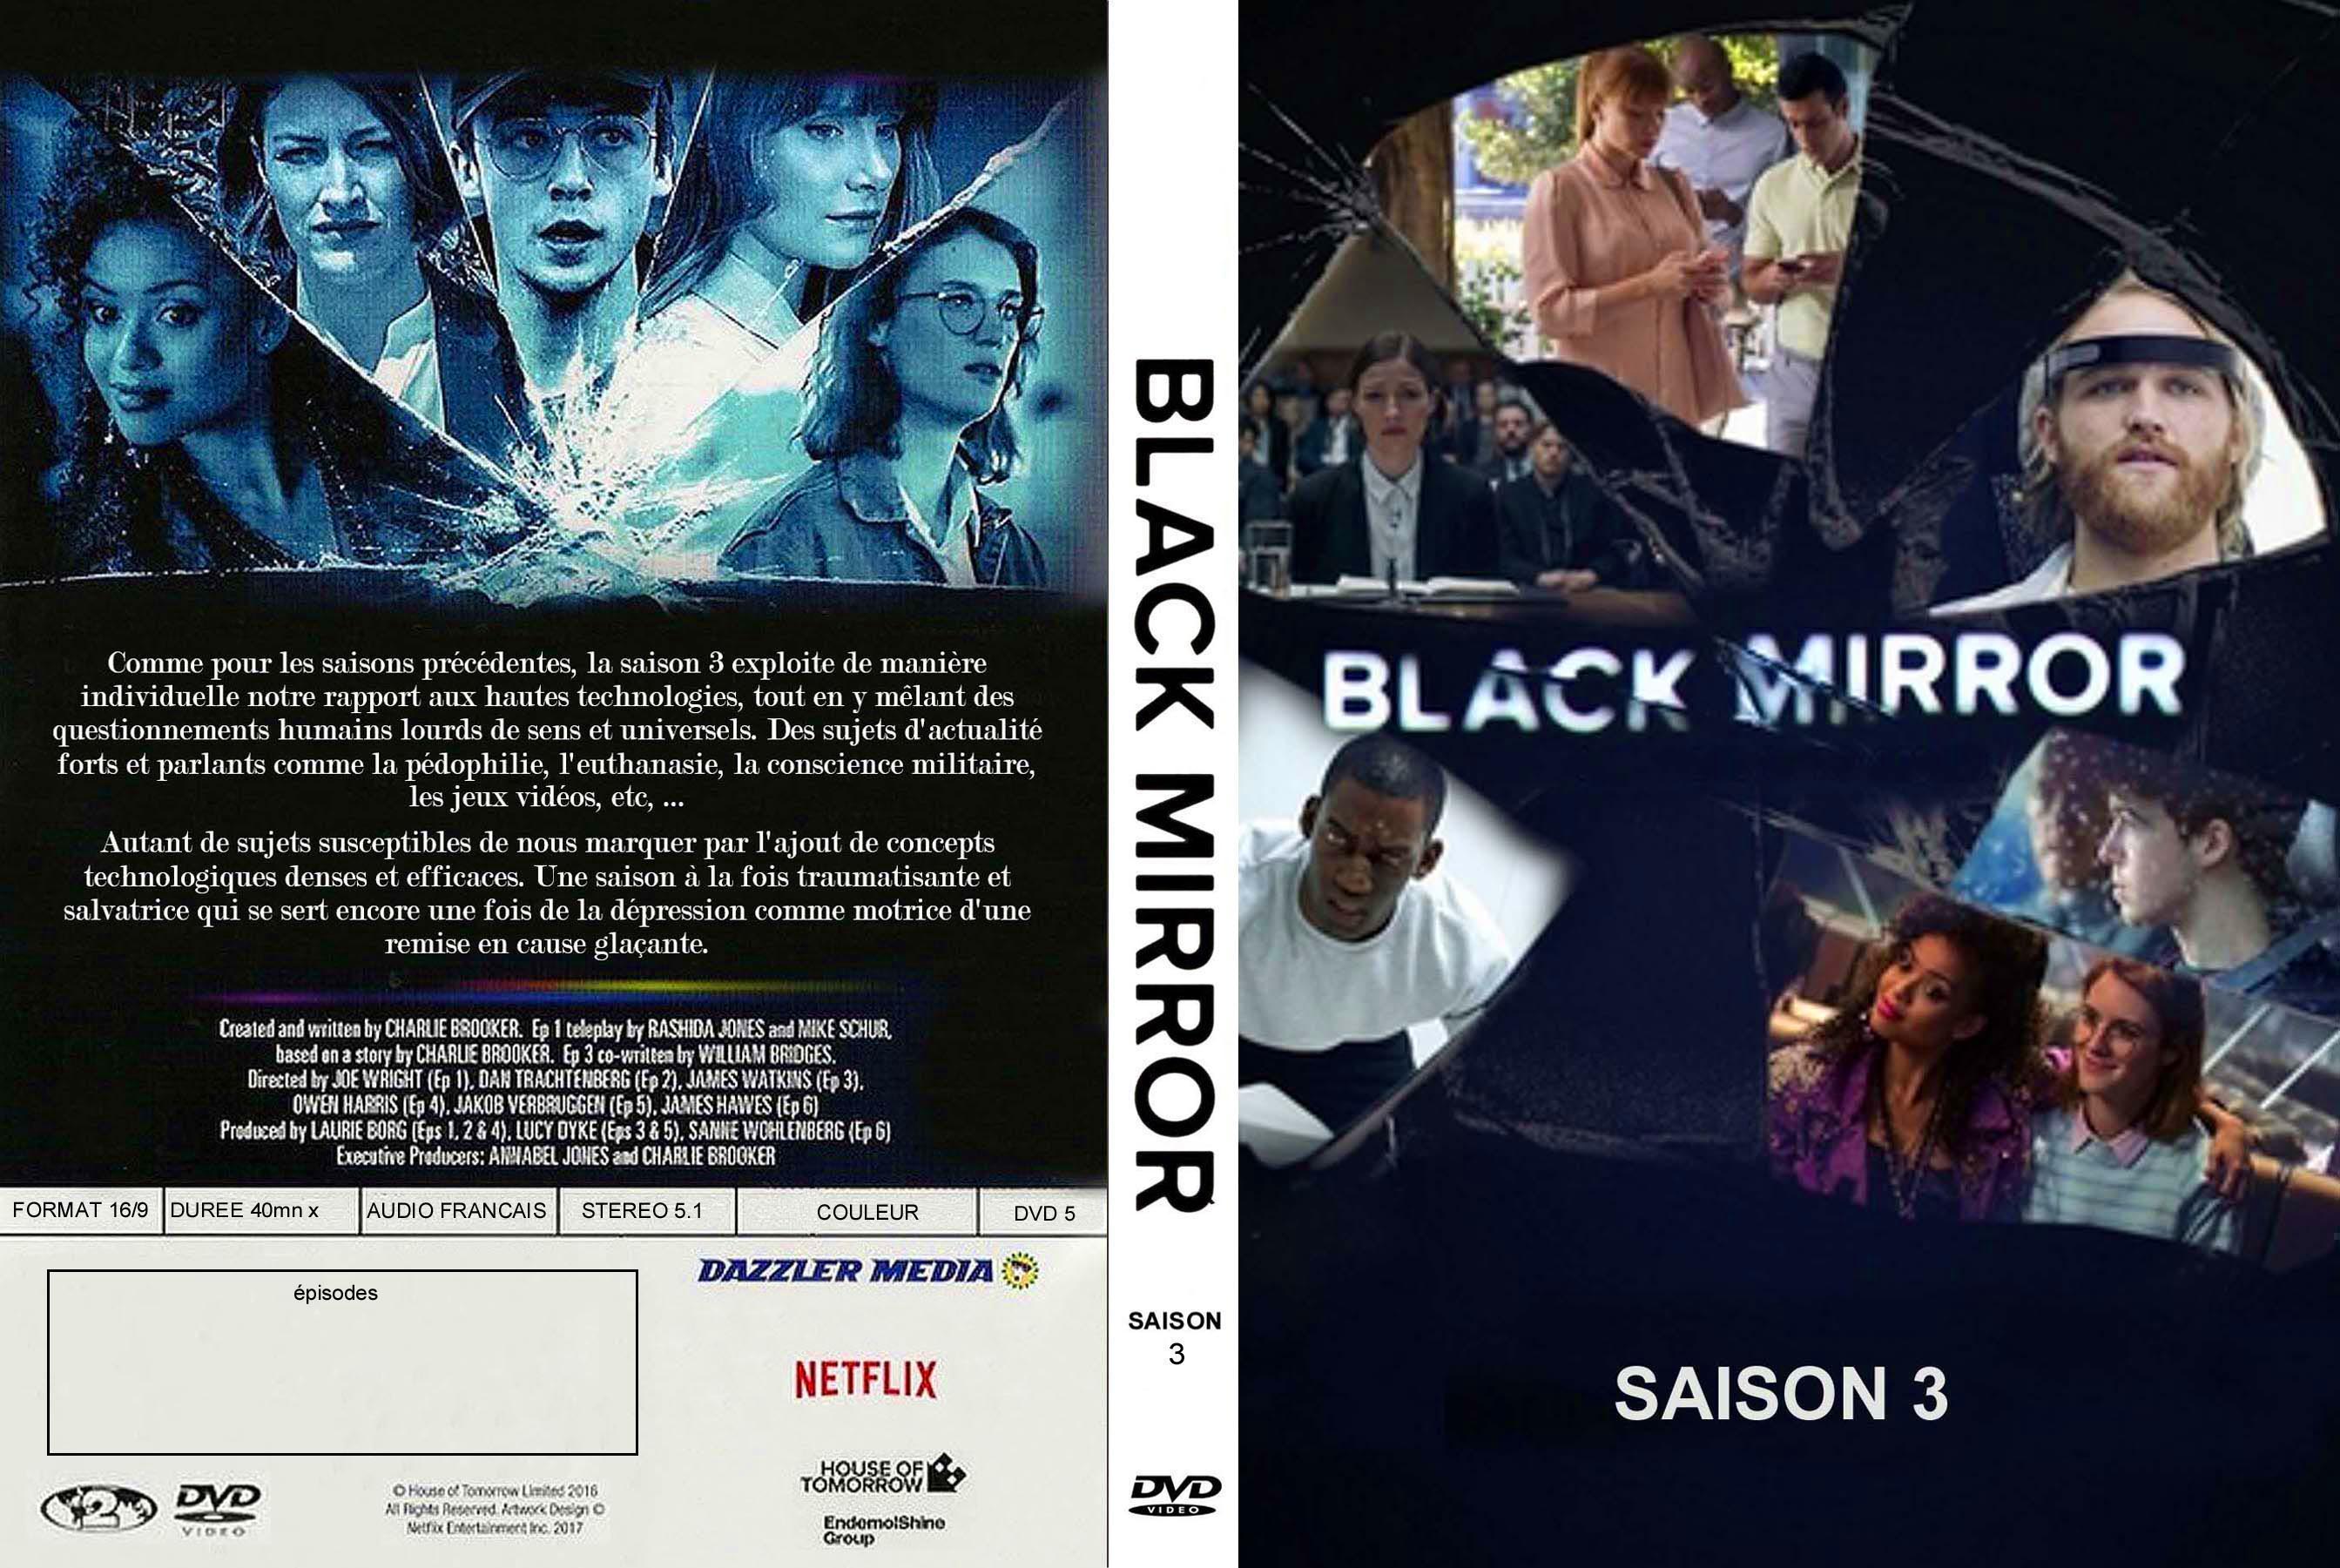 Jaquette DVD Black mirror Saison 3 custom